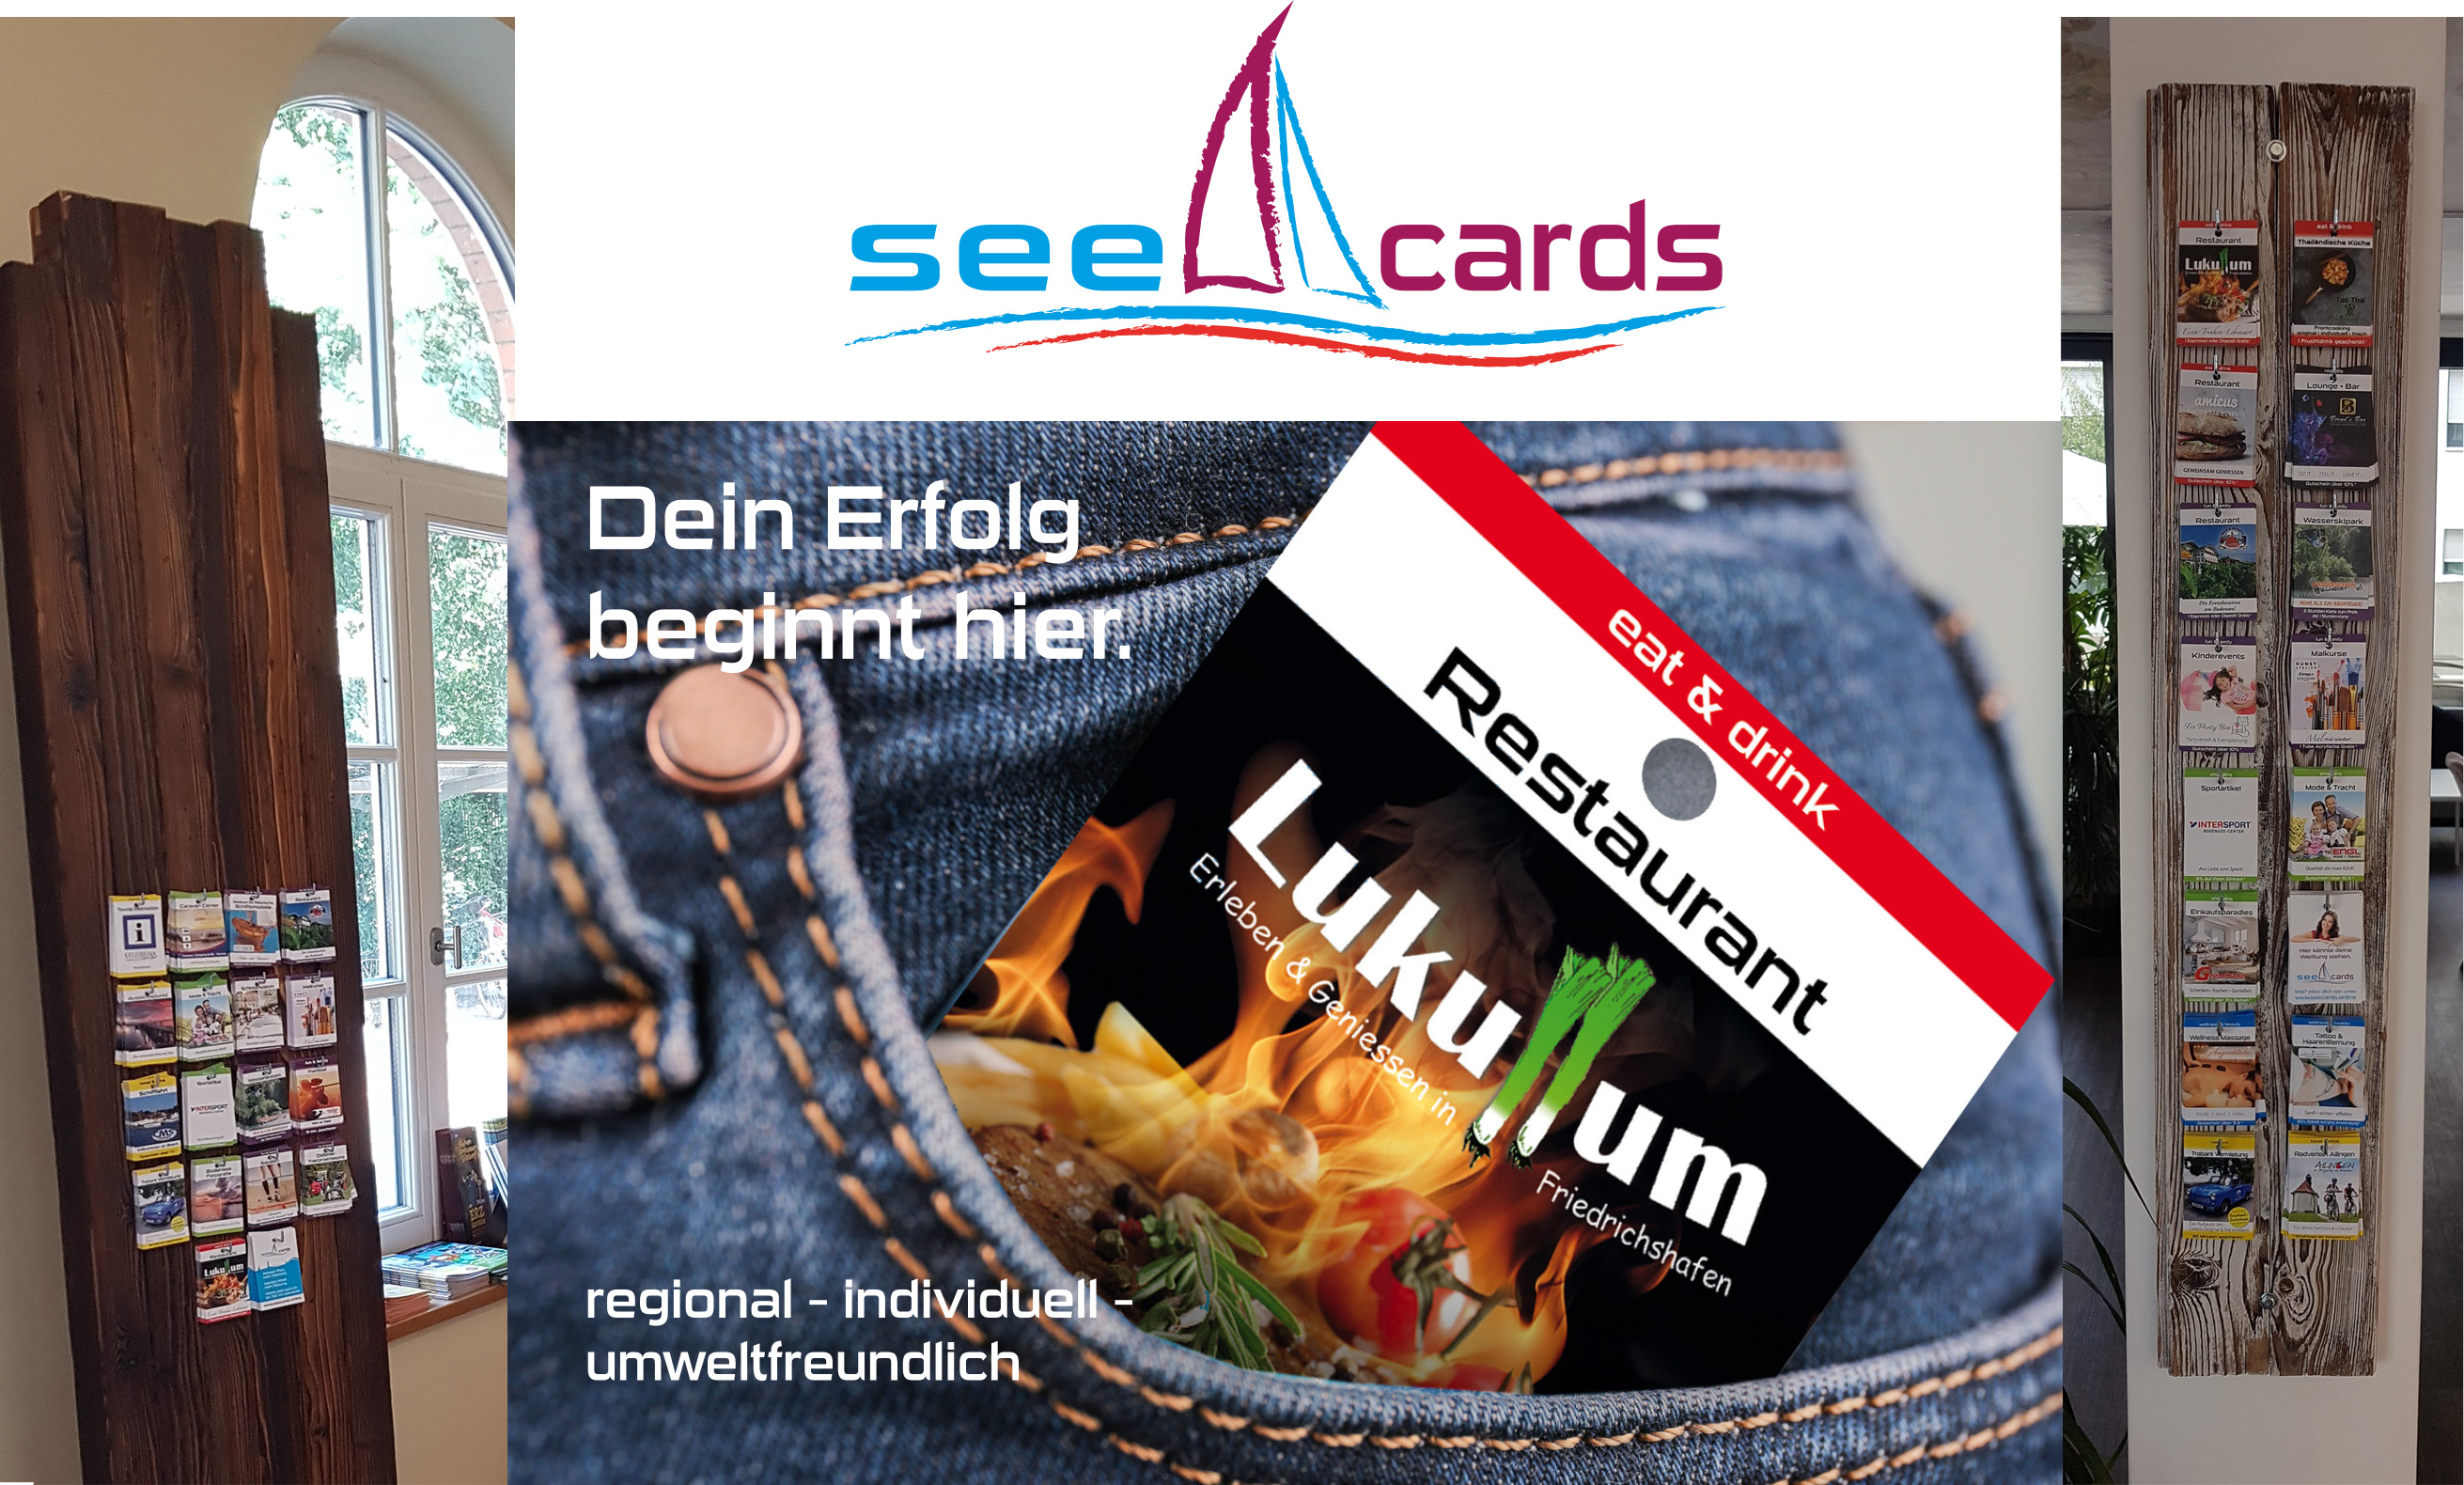 pocket card collector/seecards